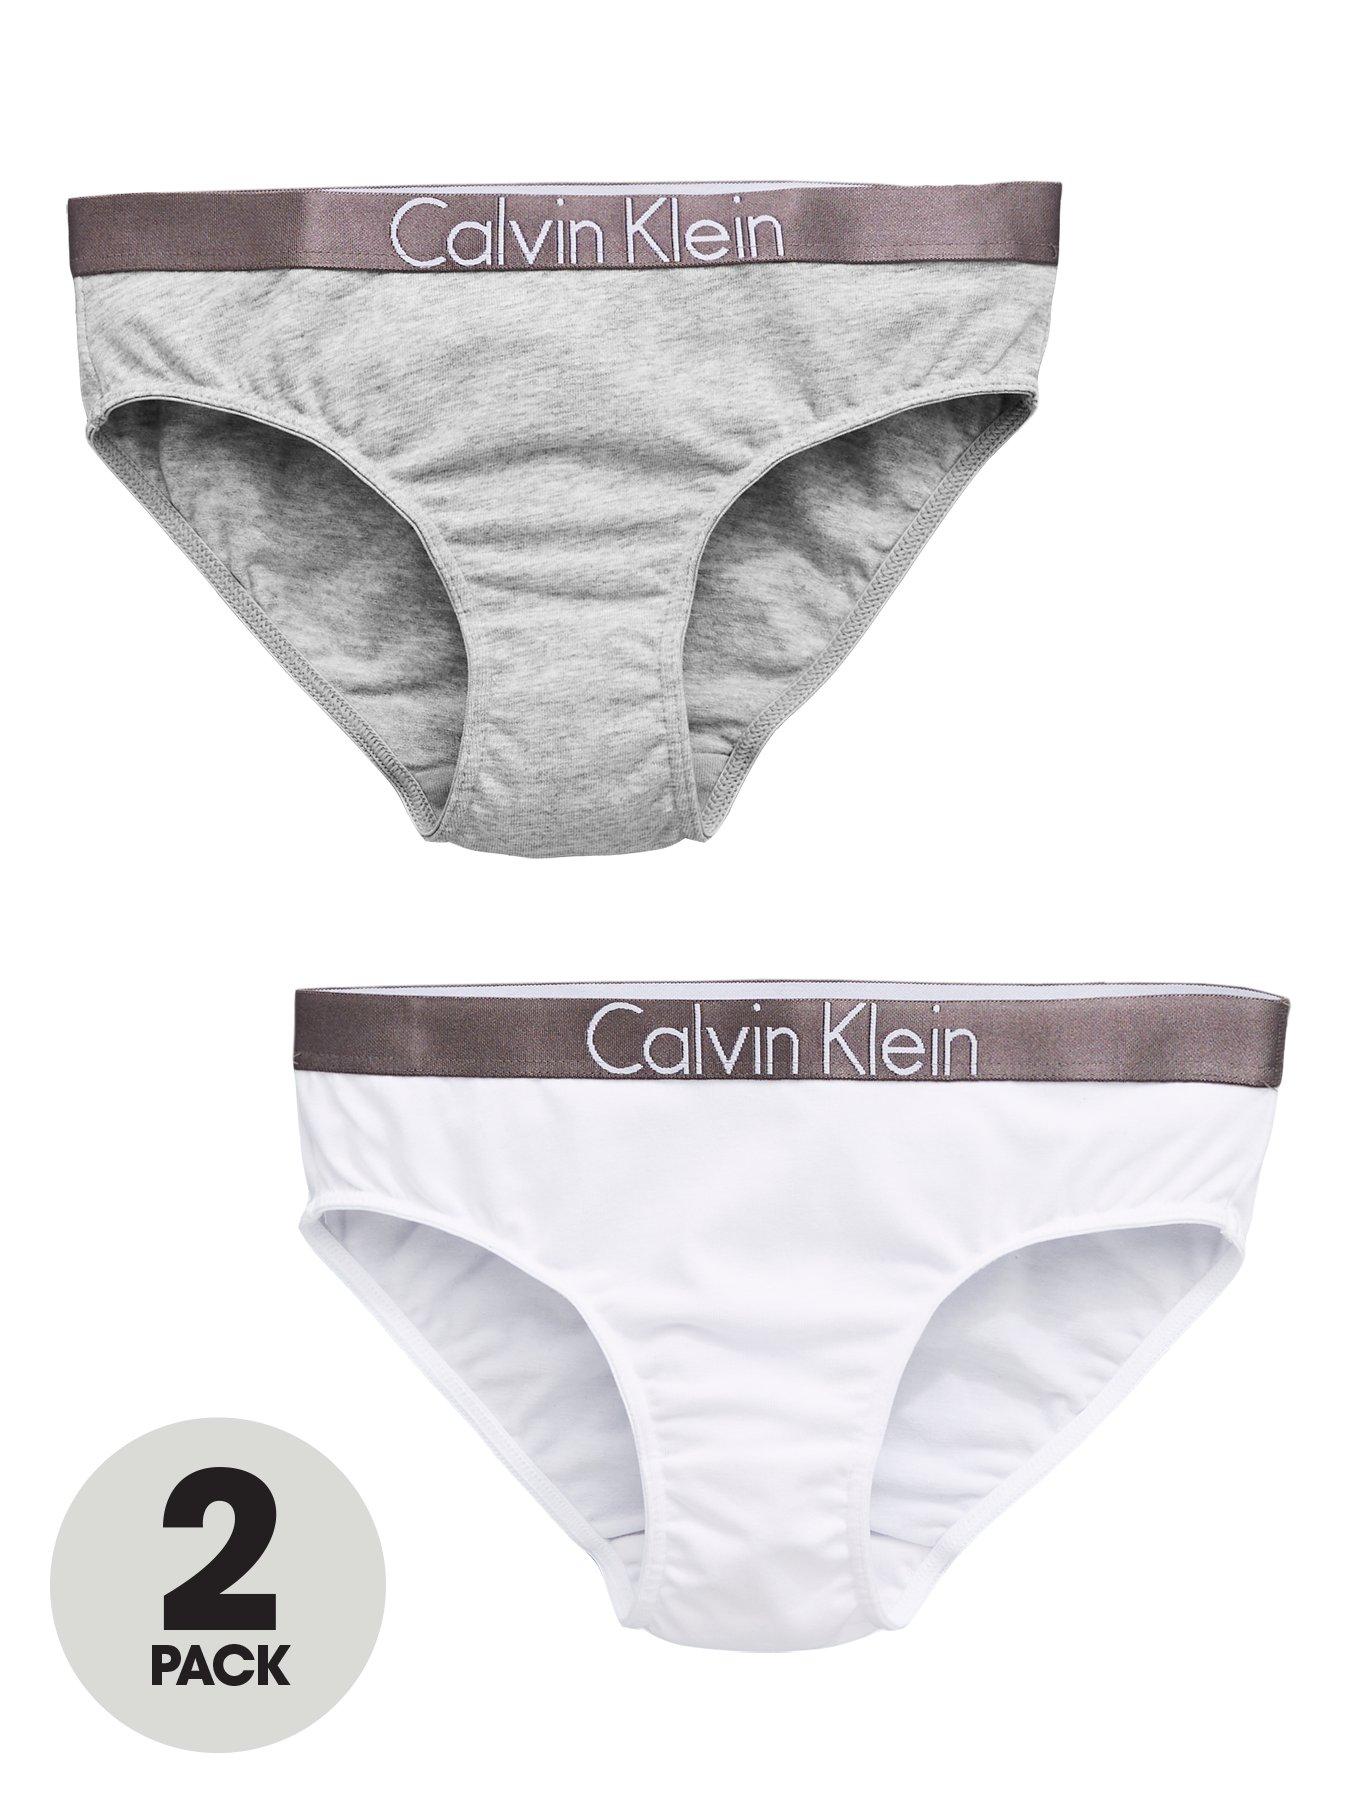 Girls underwear underpants bikini 4 pack - size 8-10, Babies & Kids, Babies  & Kids Fashion on Carousell